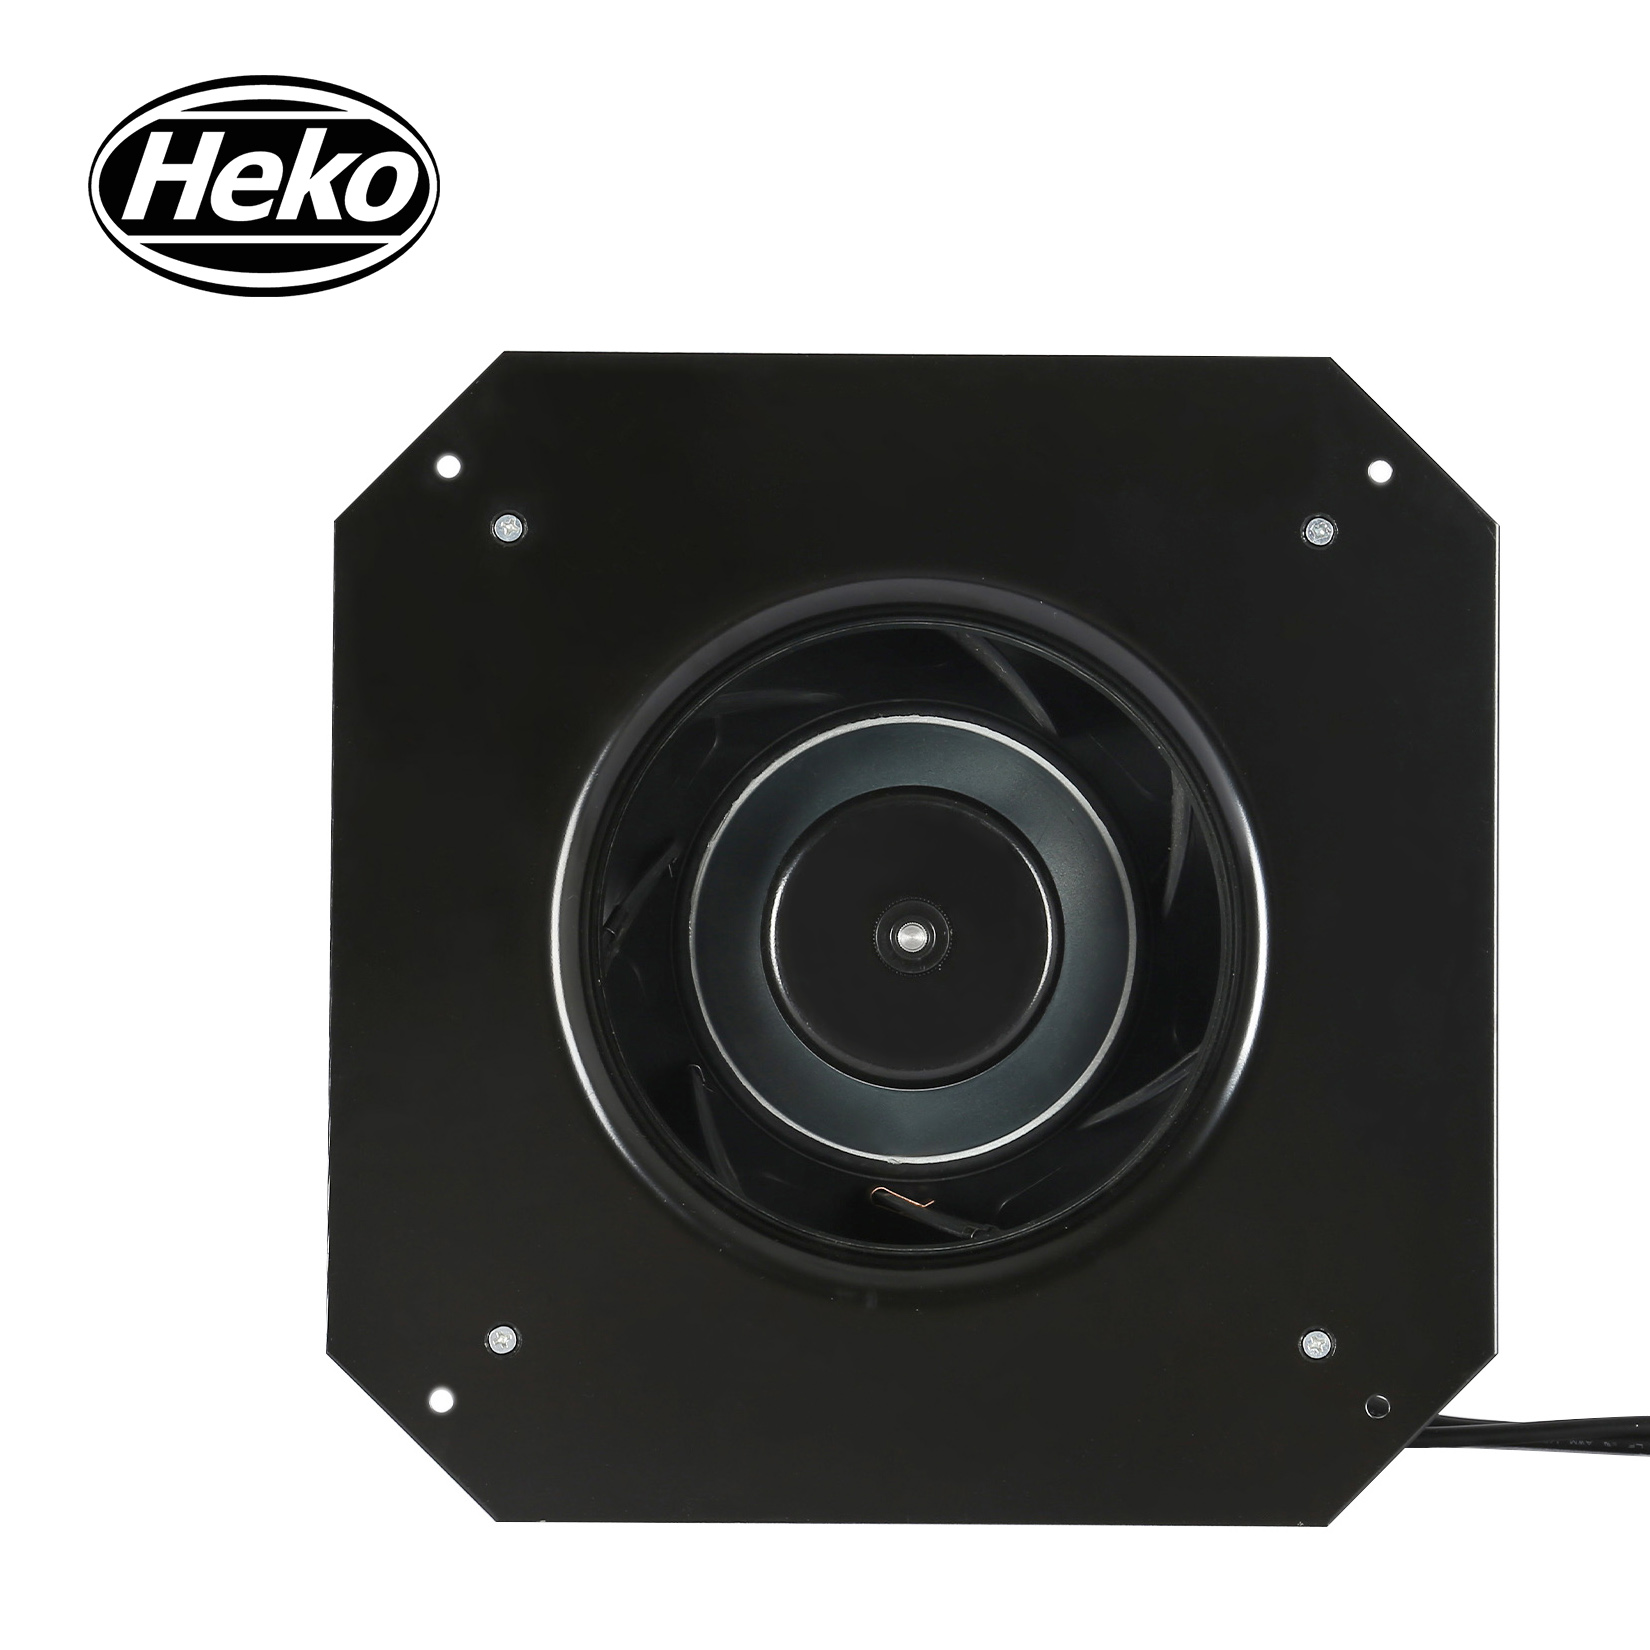 HEKO EC 225mm Push-Pull Centrifugal Suction Exhaust Fan